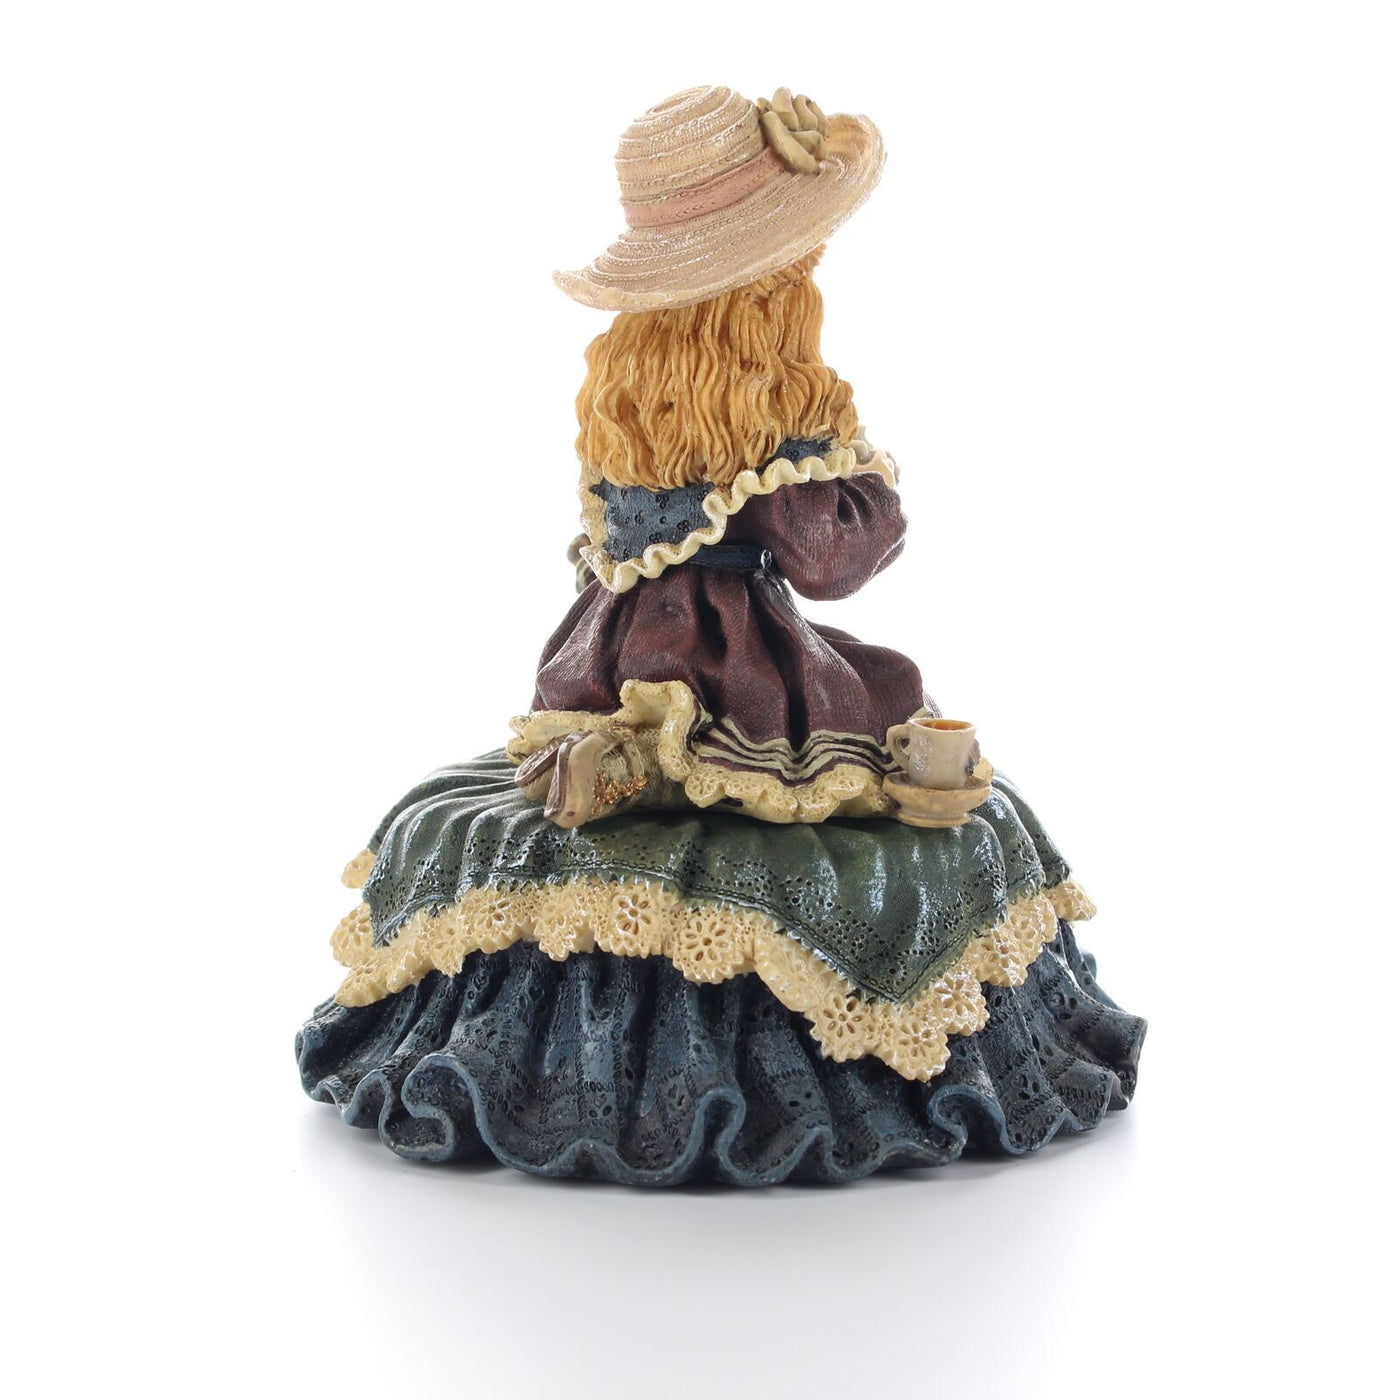 Boyds Bears Figurine Yesterdays Child Vintage Dollstone Tea For Two Style 272001